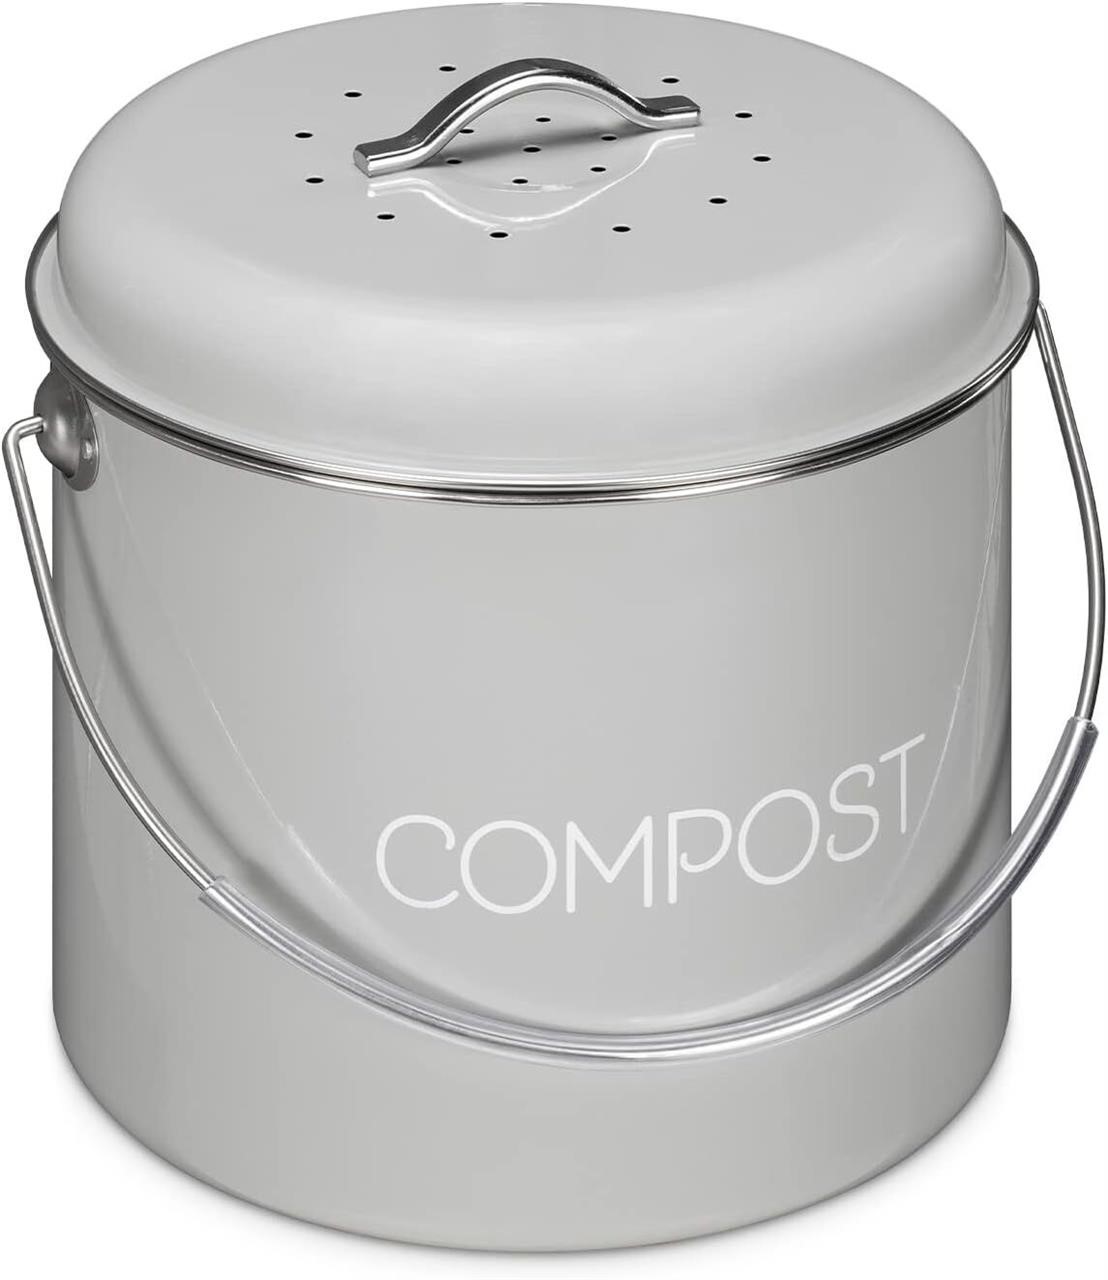 1.3 Gallon Metal Compost Caddy Bin - Gray 5L